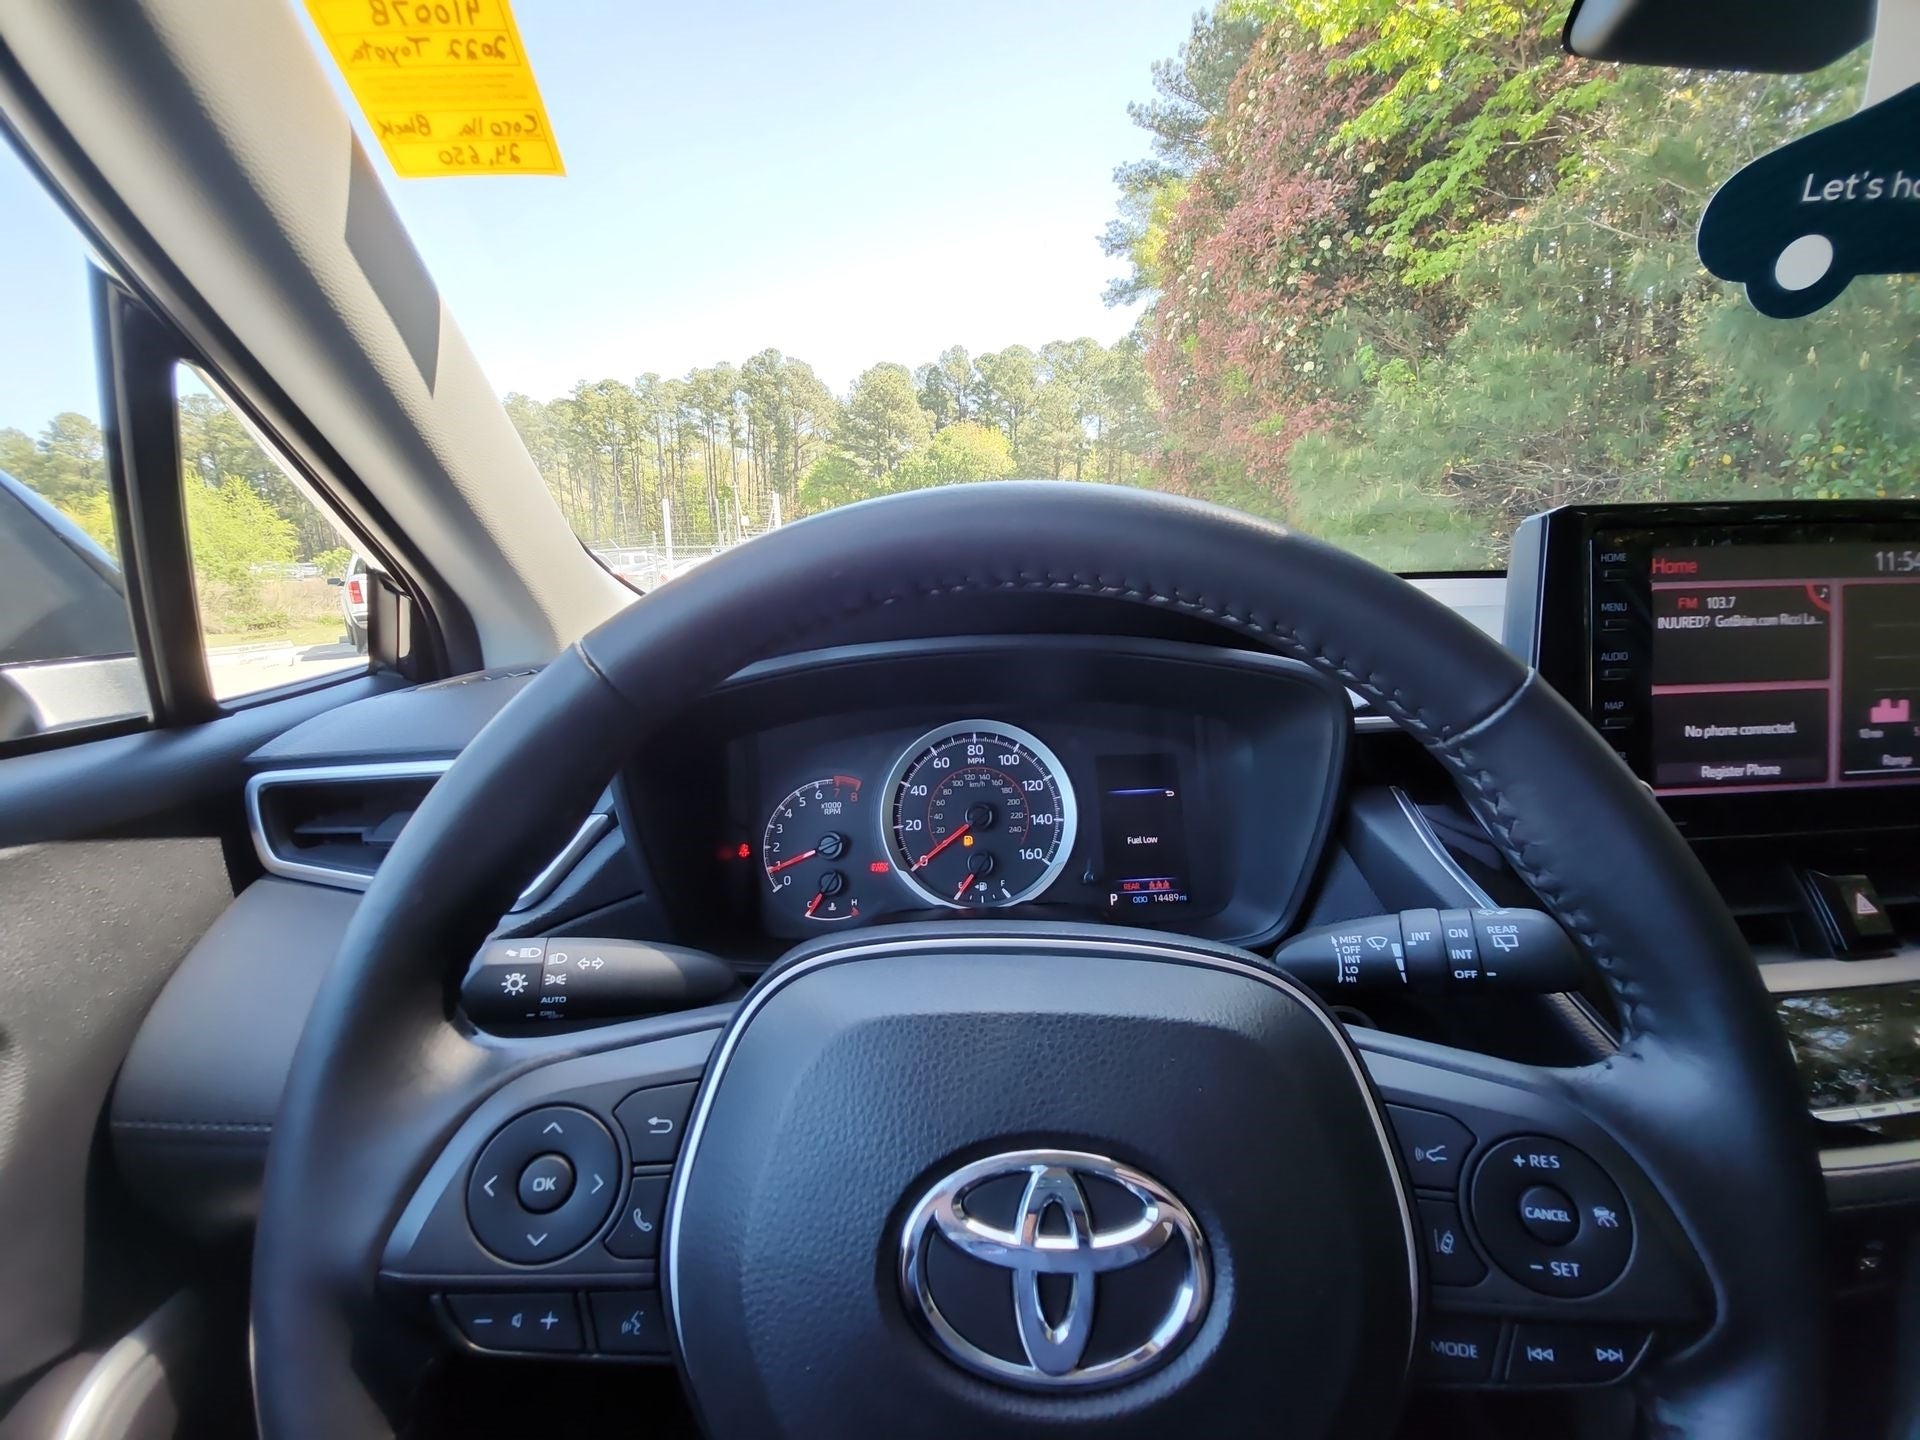 2022 Toyota Corolla Cross LE